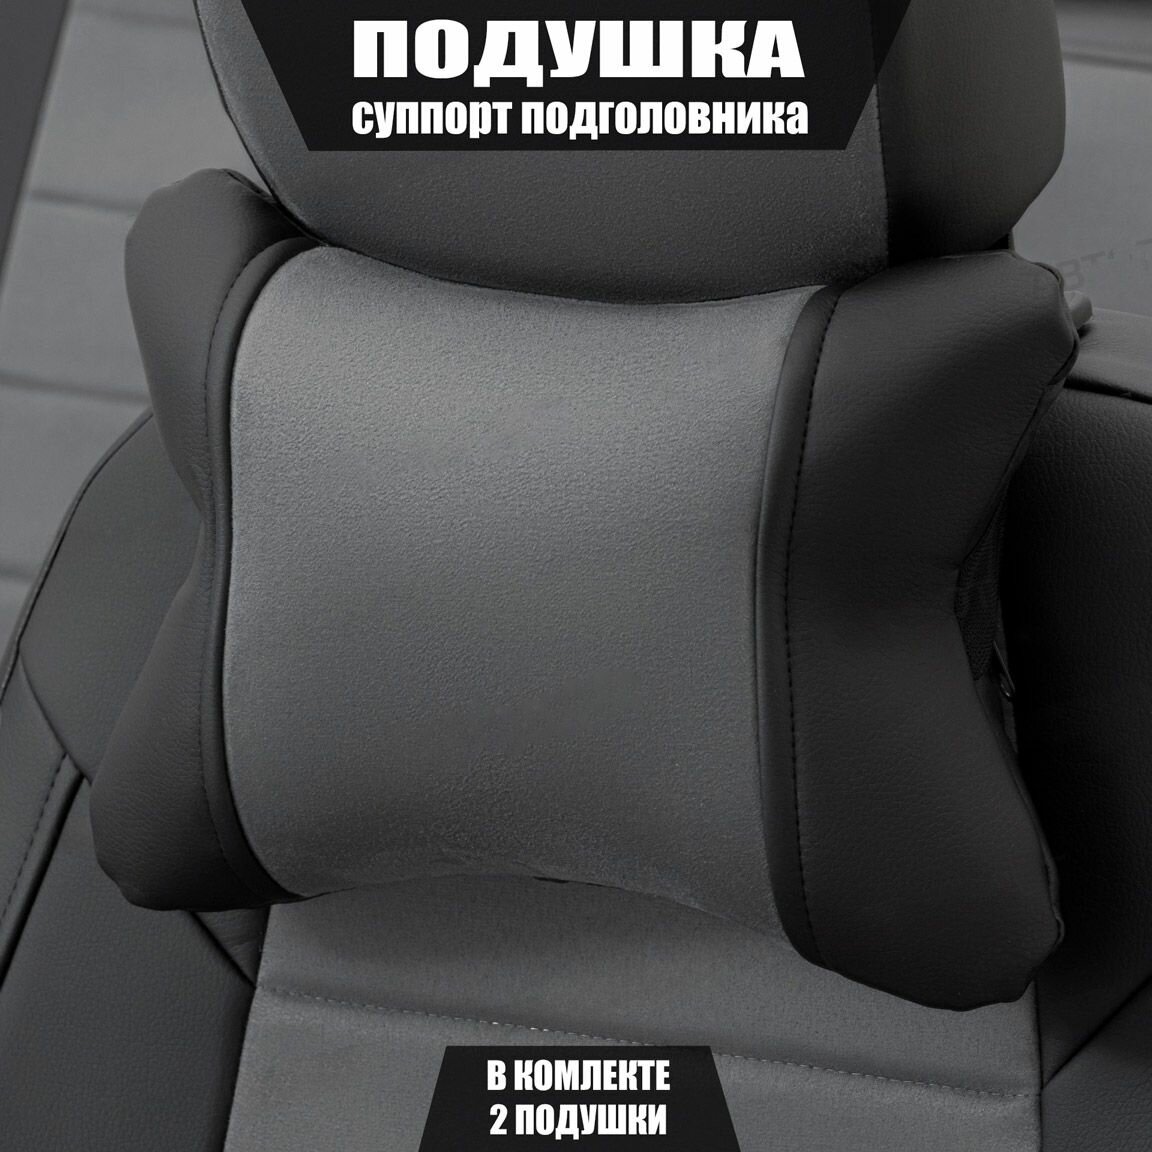 Подушки под шею (суппорт подголовника) для Мазда цкс-5 (2011 - 2015) внедорожник 5 дверей / Mazda CX-5 Алькантара 2 подушки Коричневый